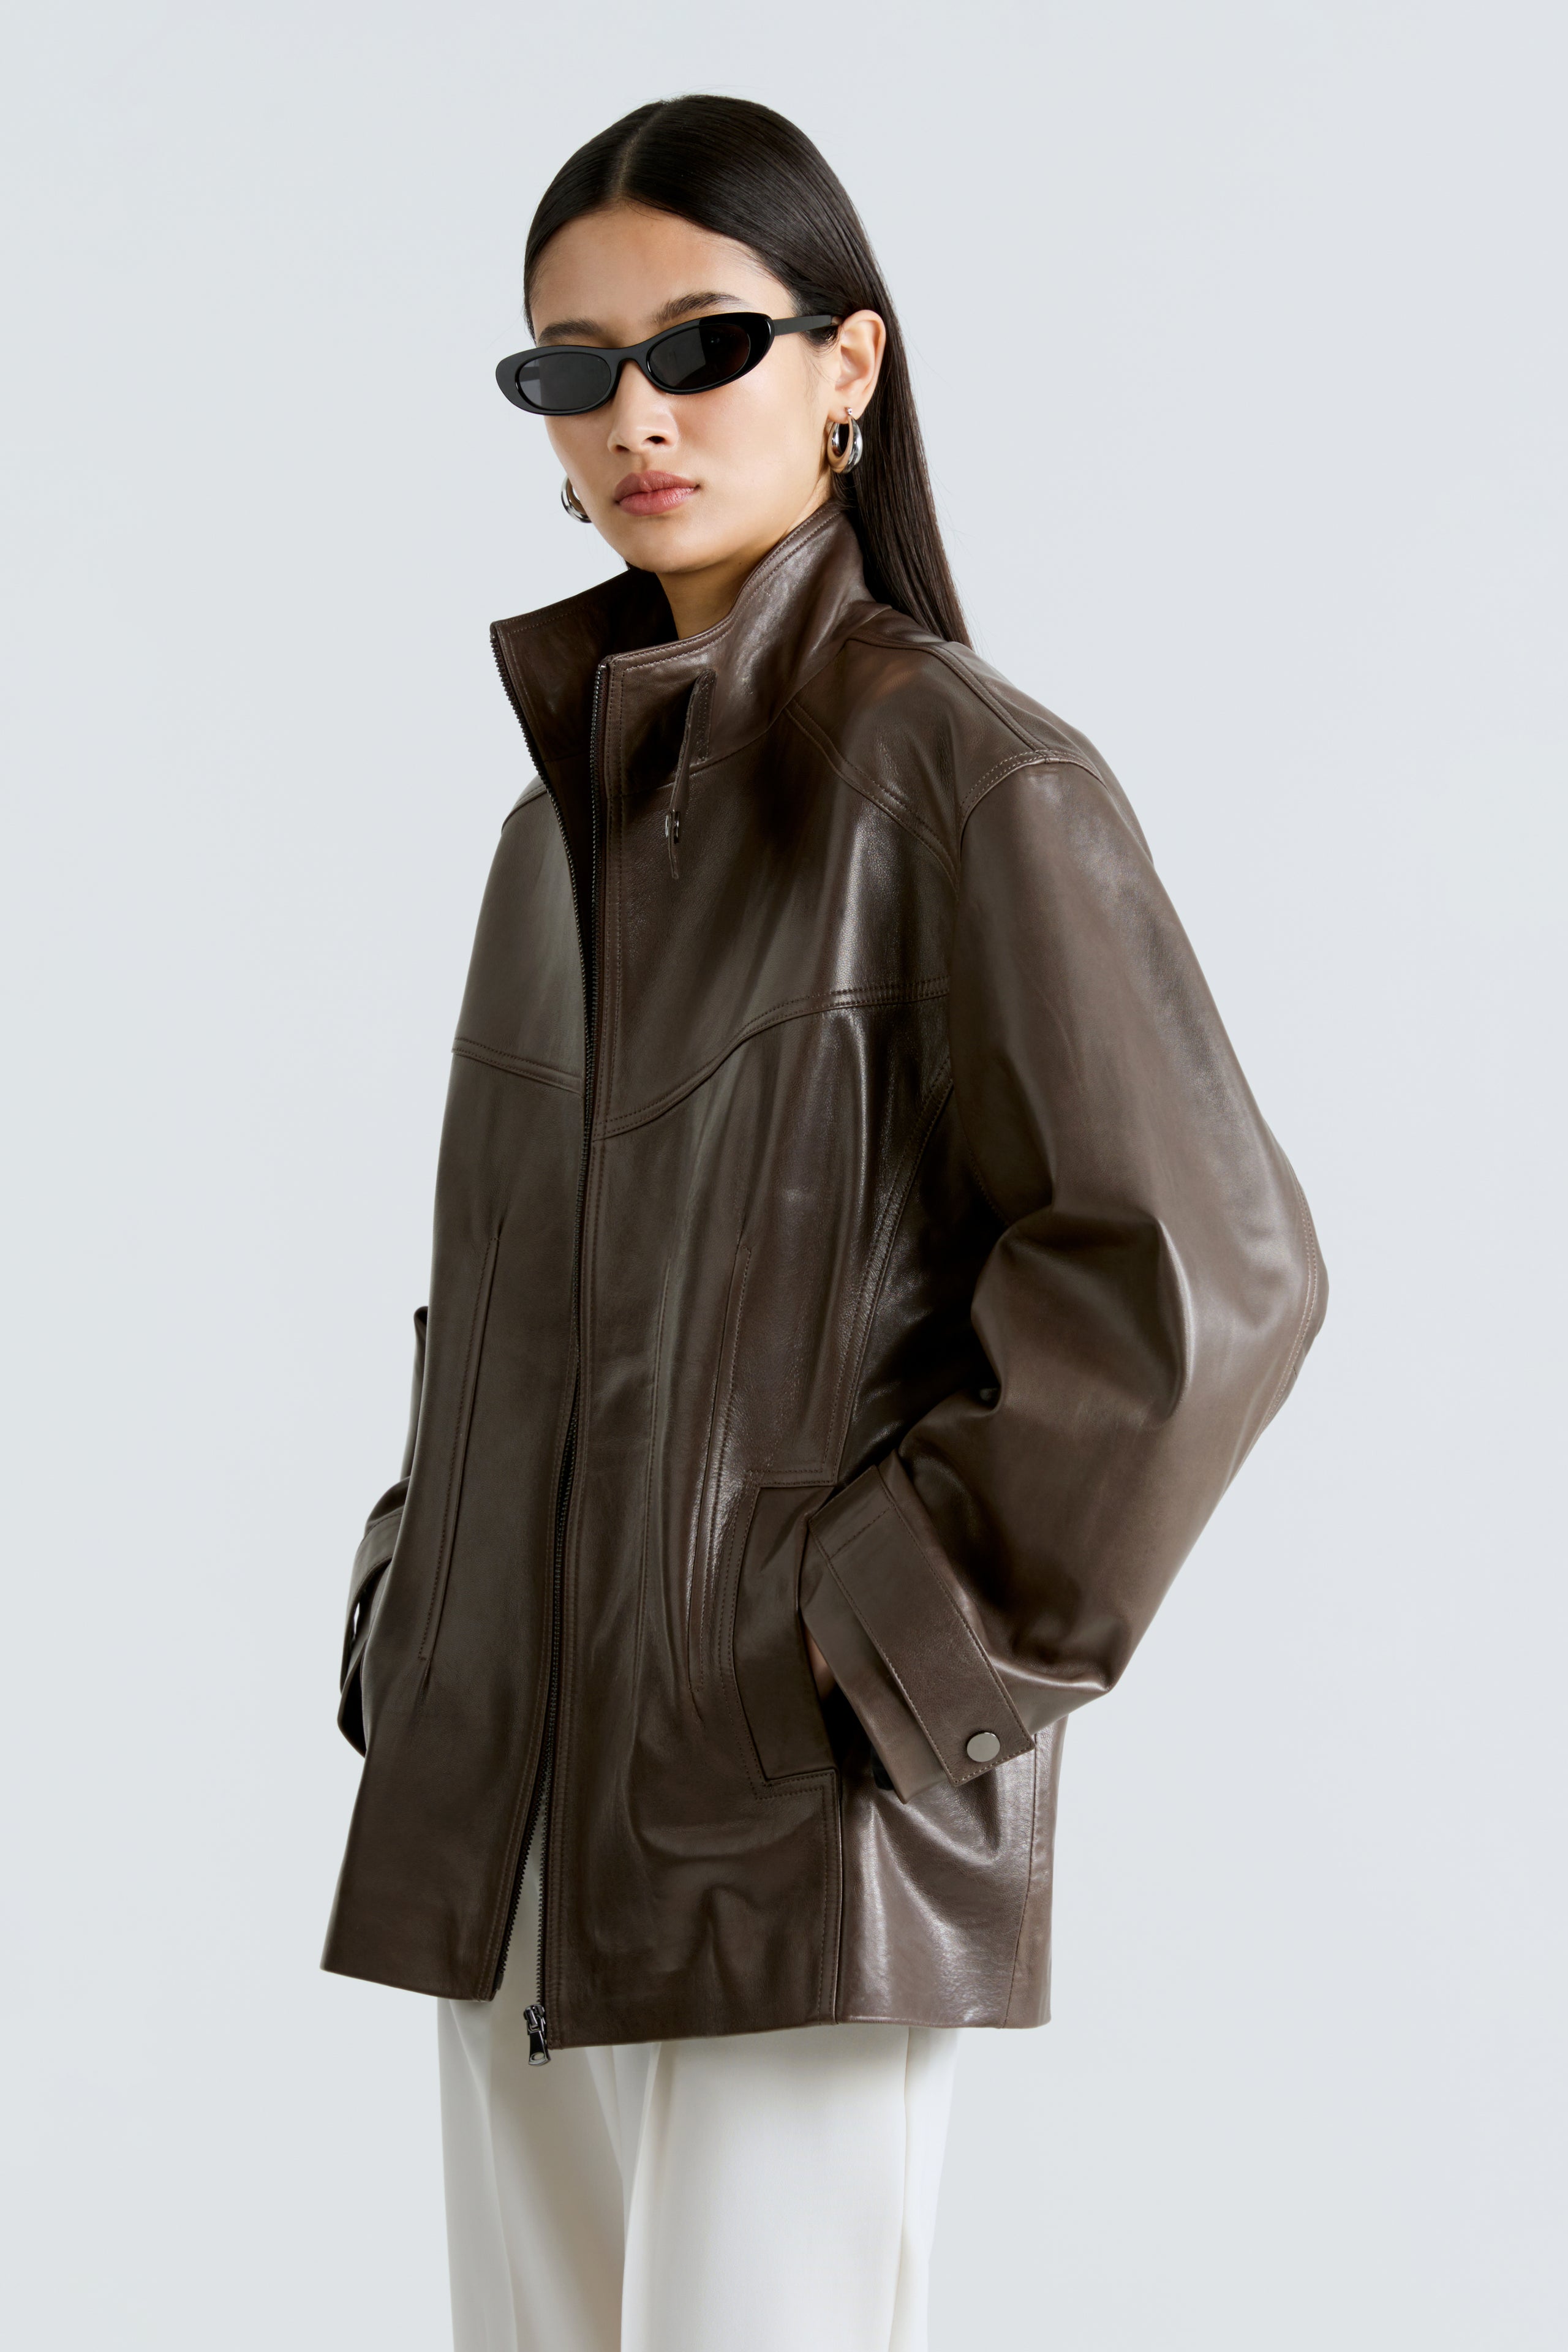 Model is wearing the Rue Truffle Leather Bomber Jacket Side